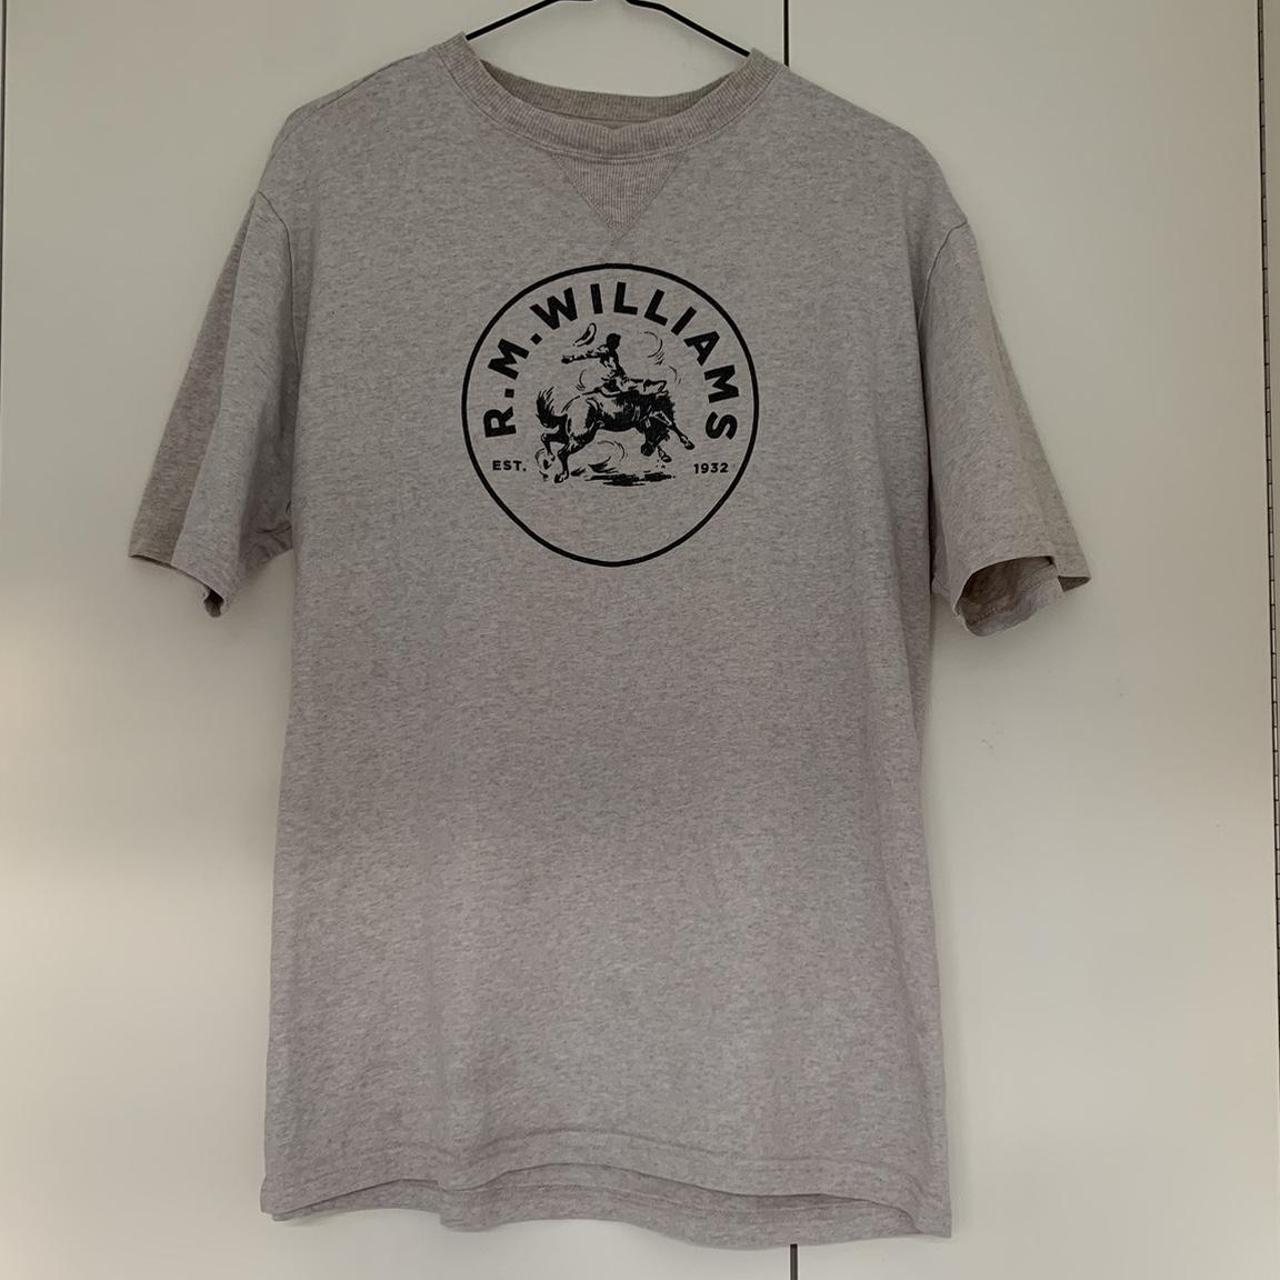 RM Williams T Shirt. Colour: Grey with black print... - Depop